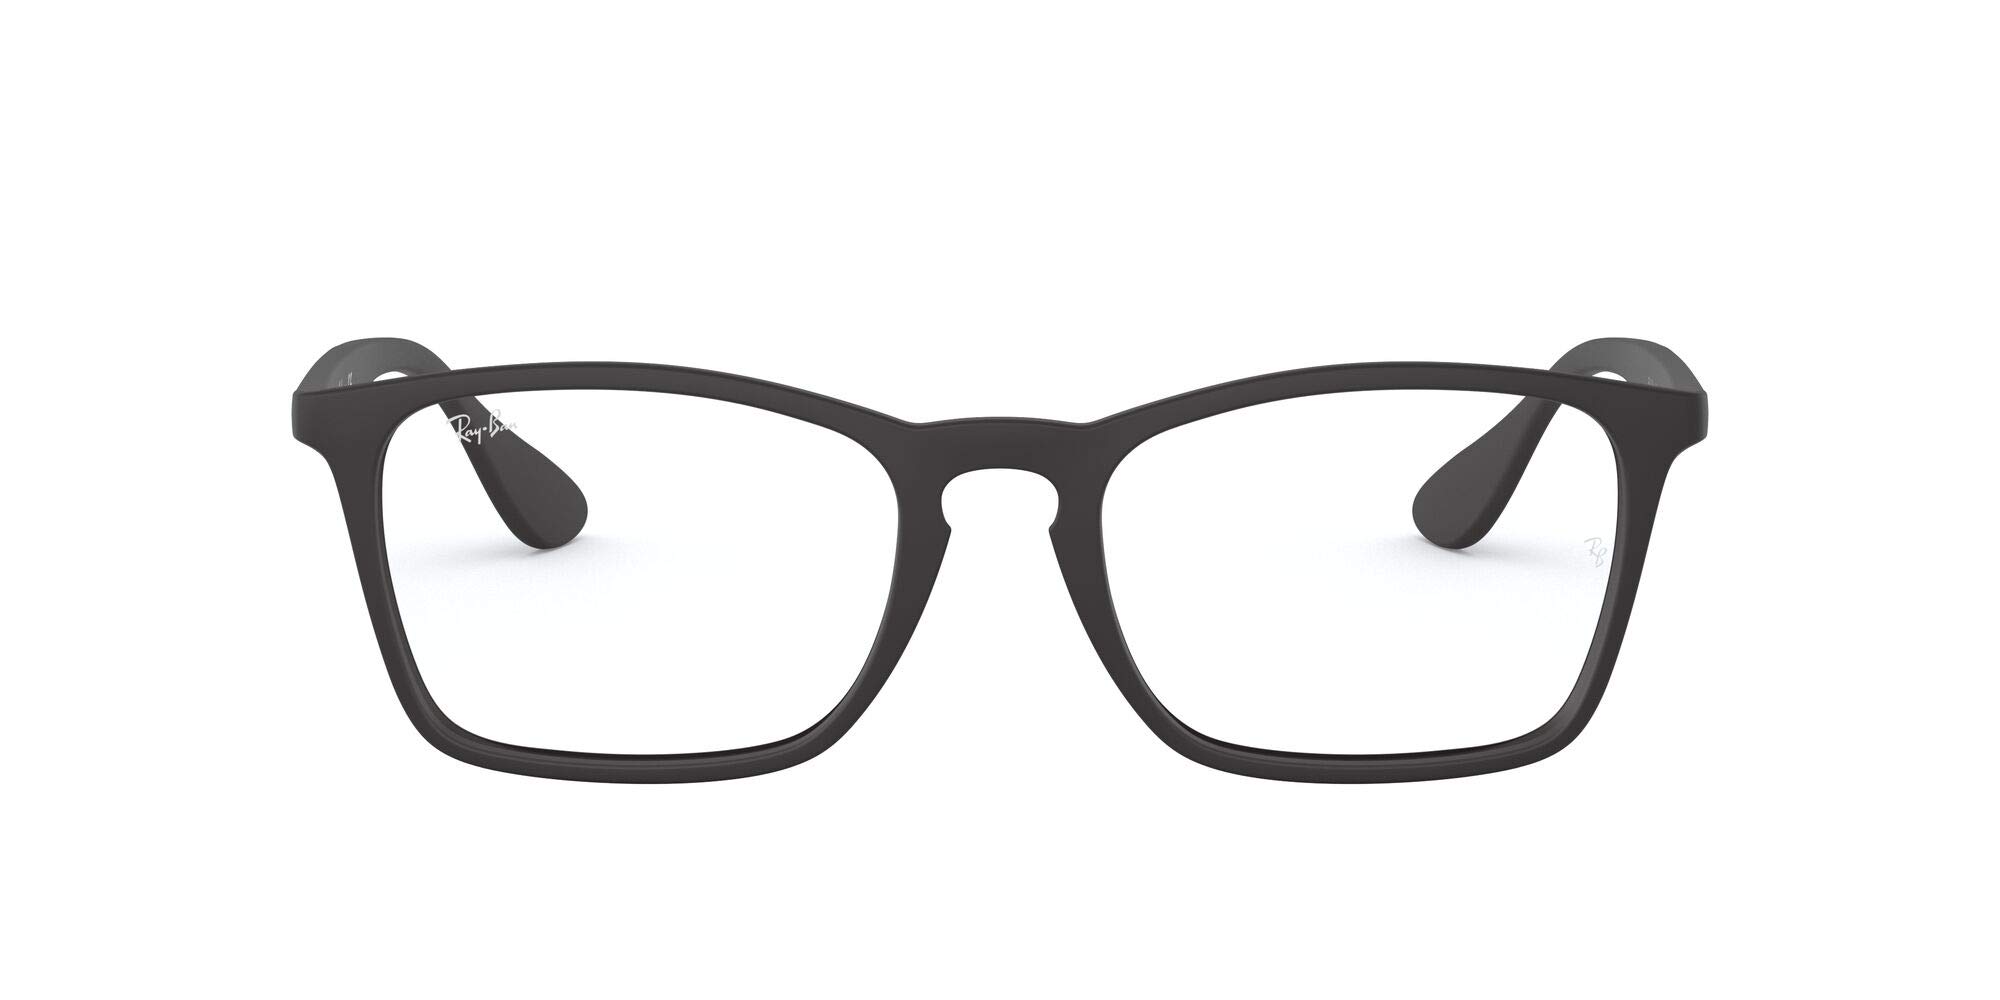 Ray-Ban Men's Rx7045 Square Prescription Eyeglass Frames, Rubber Black/Demo Lens, 55 mm